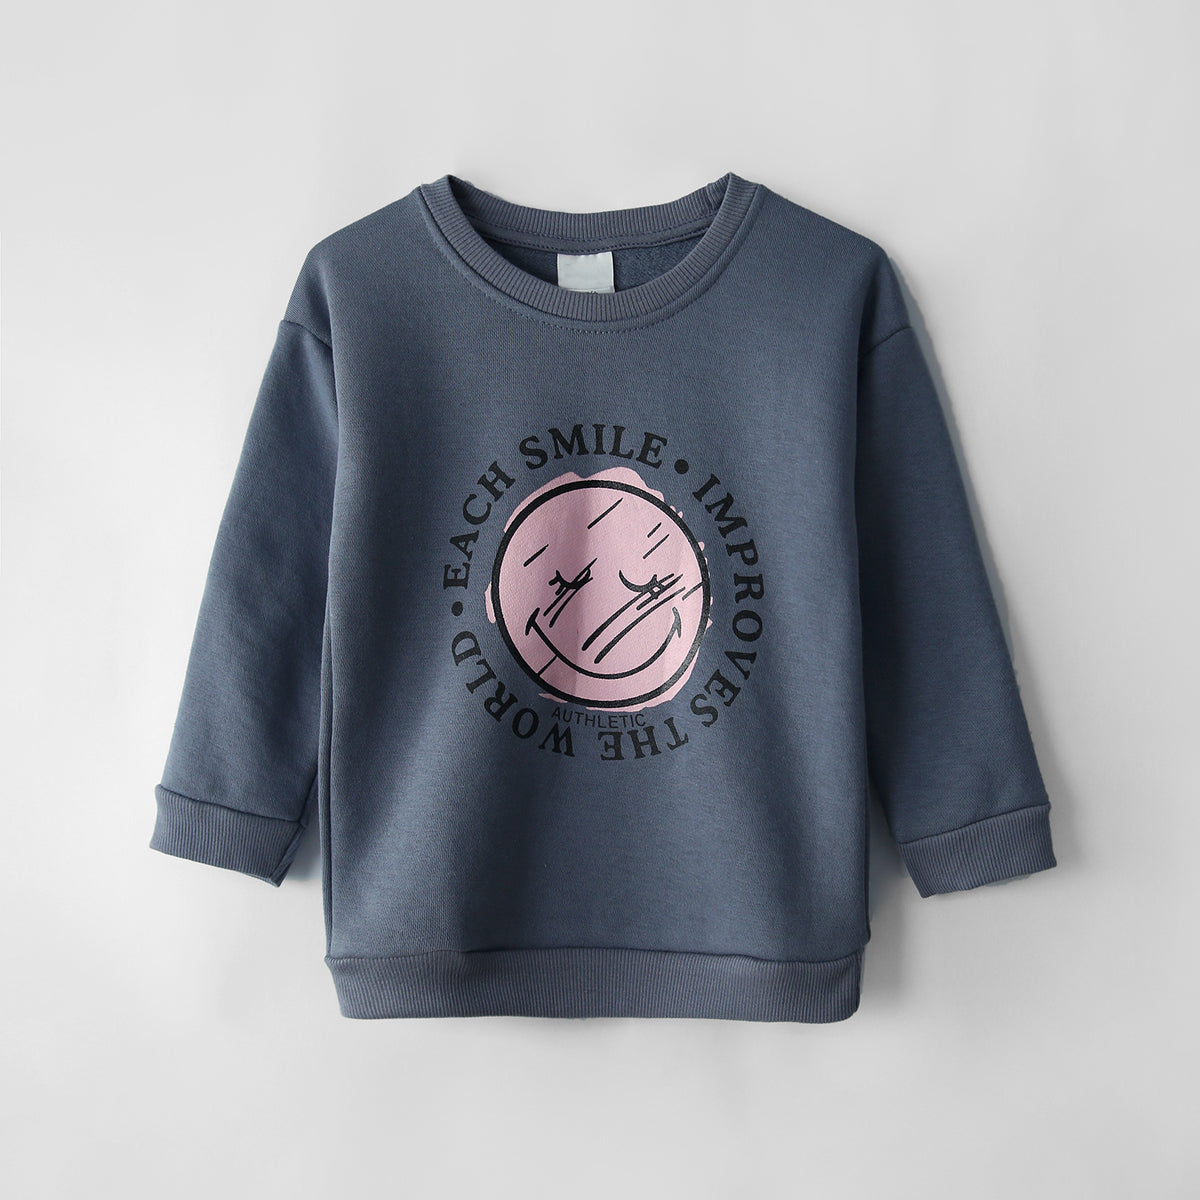 Premium Quality Graphic Fleece Sweatshirt For Girls